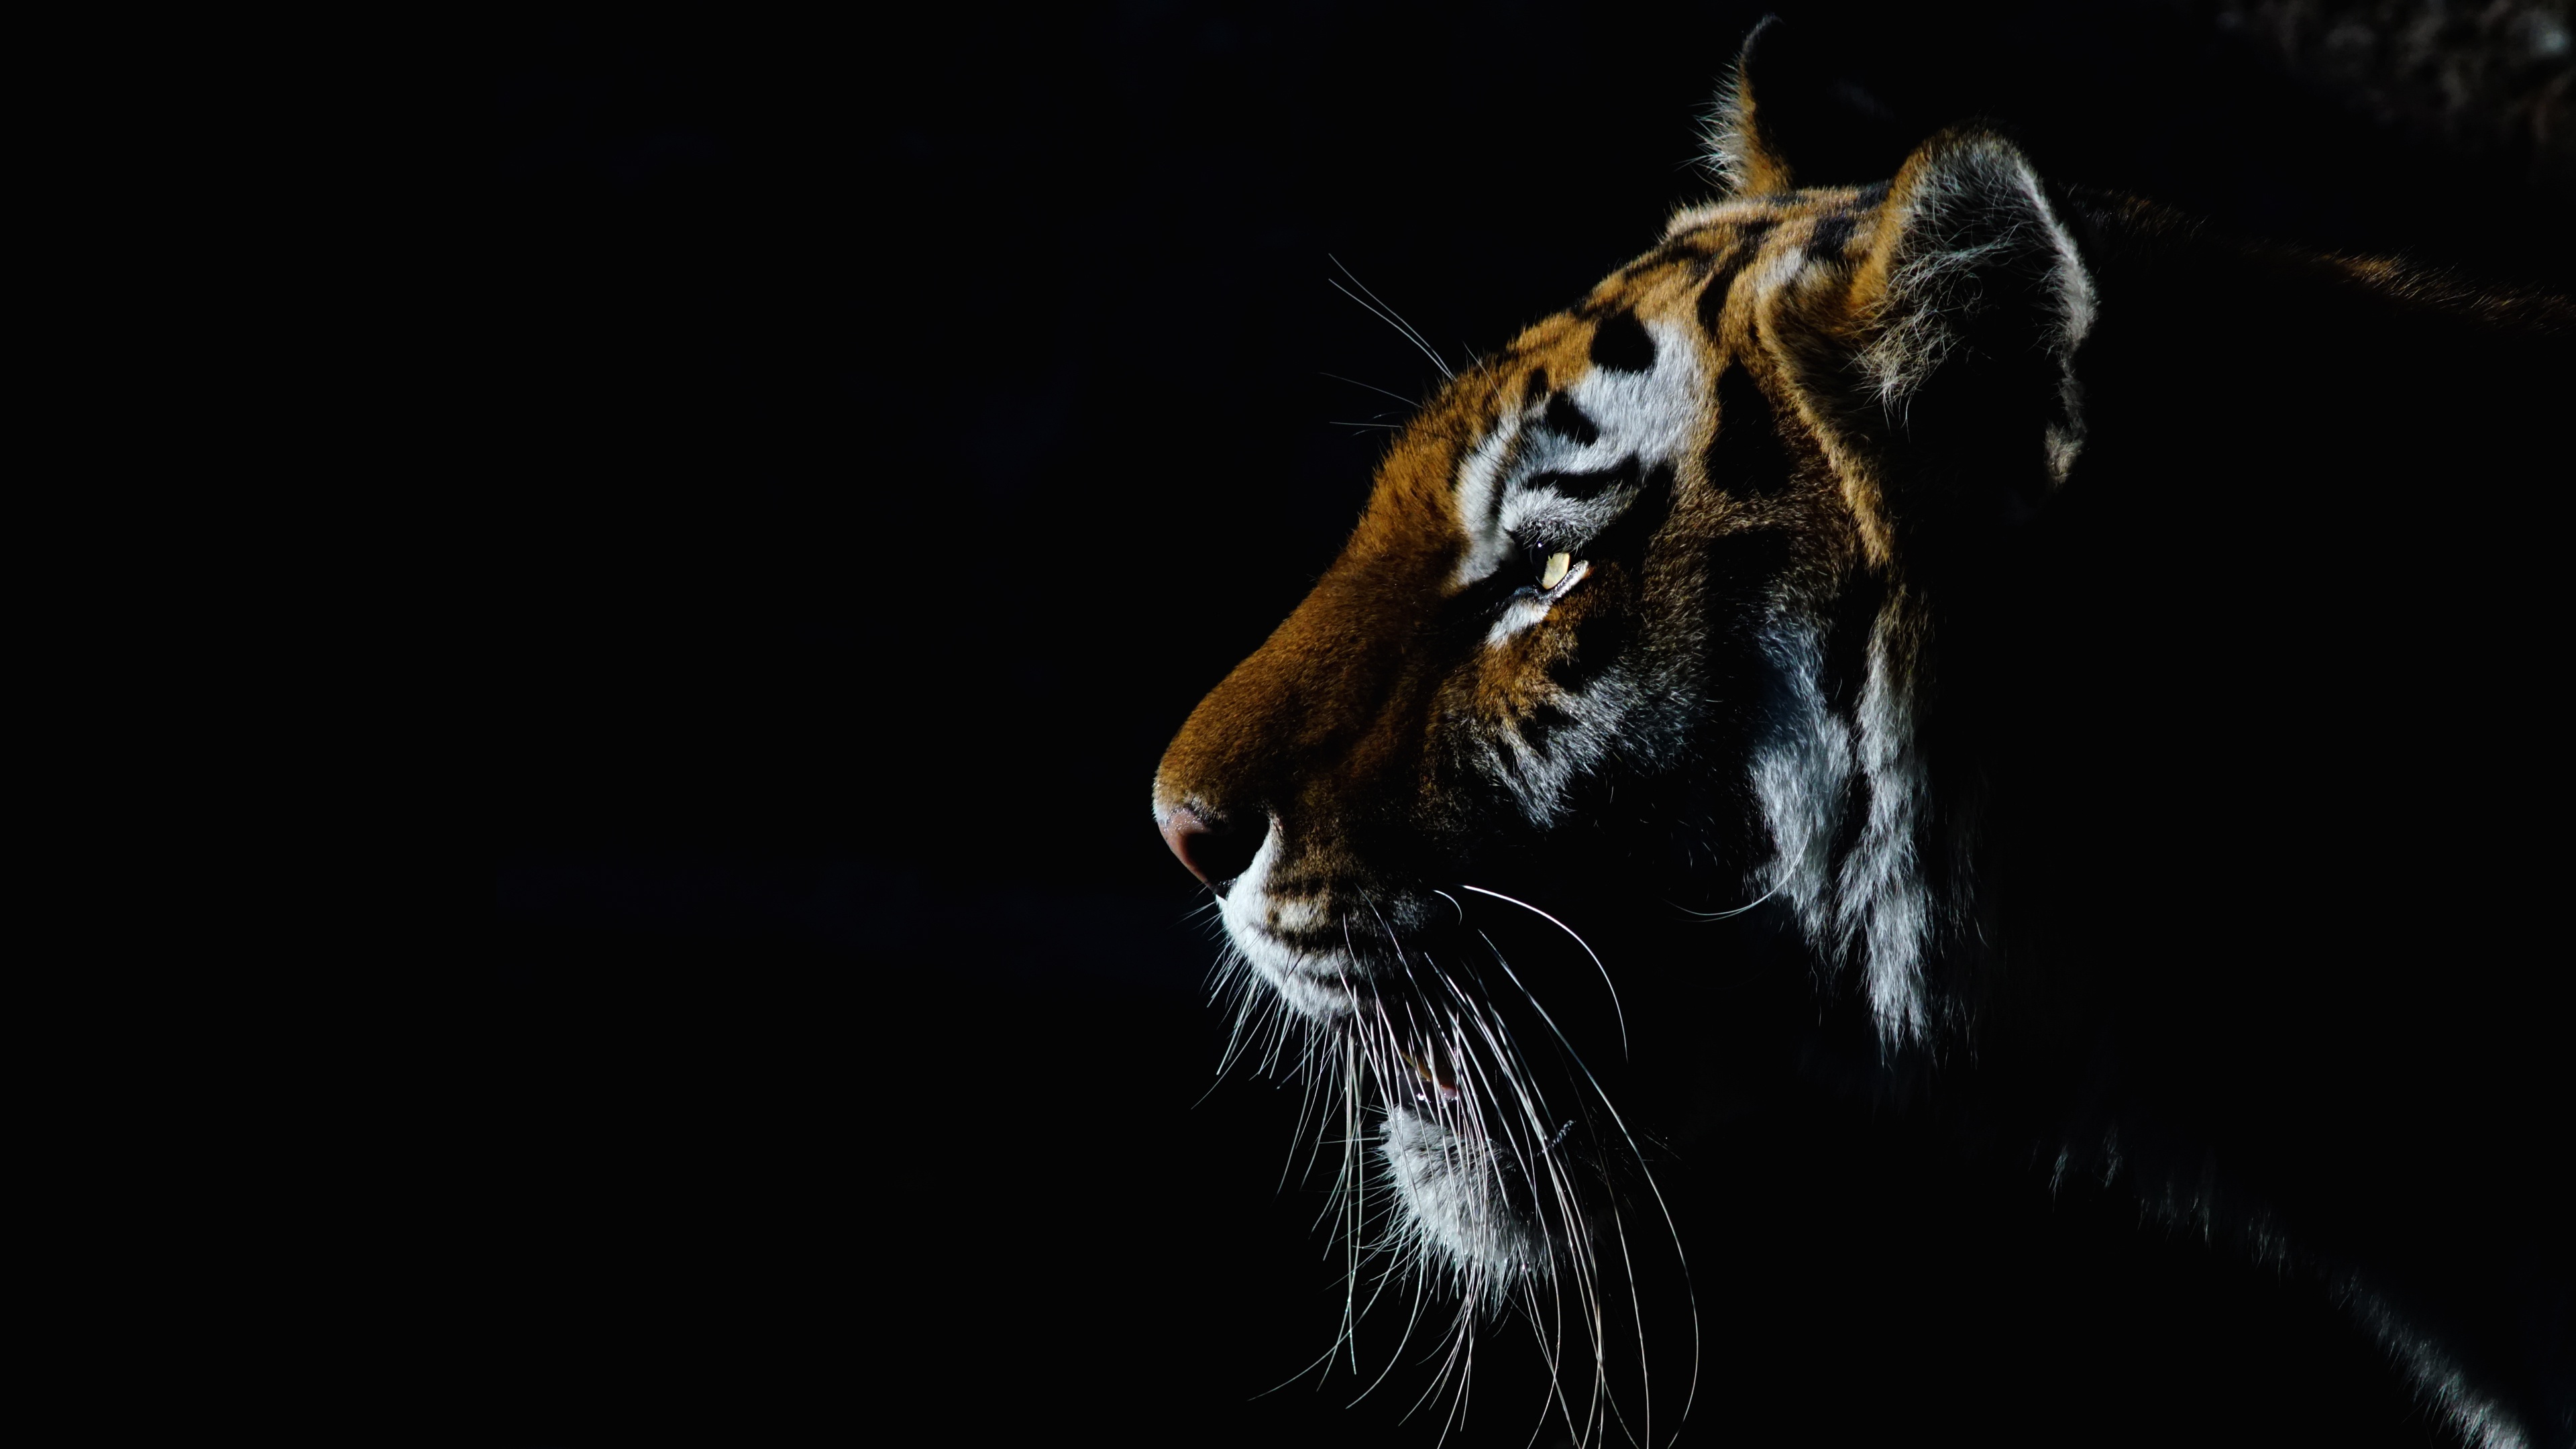 Tiger 4k Ultra HD Wallpaper